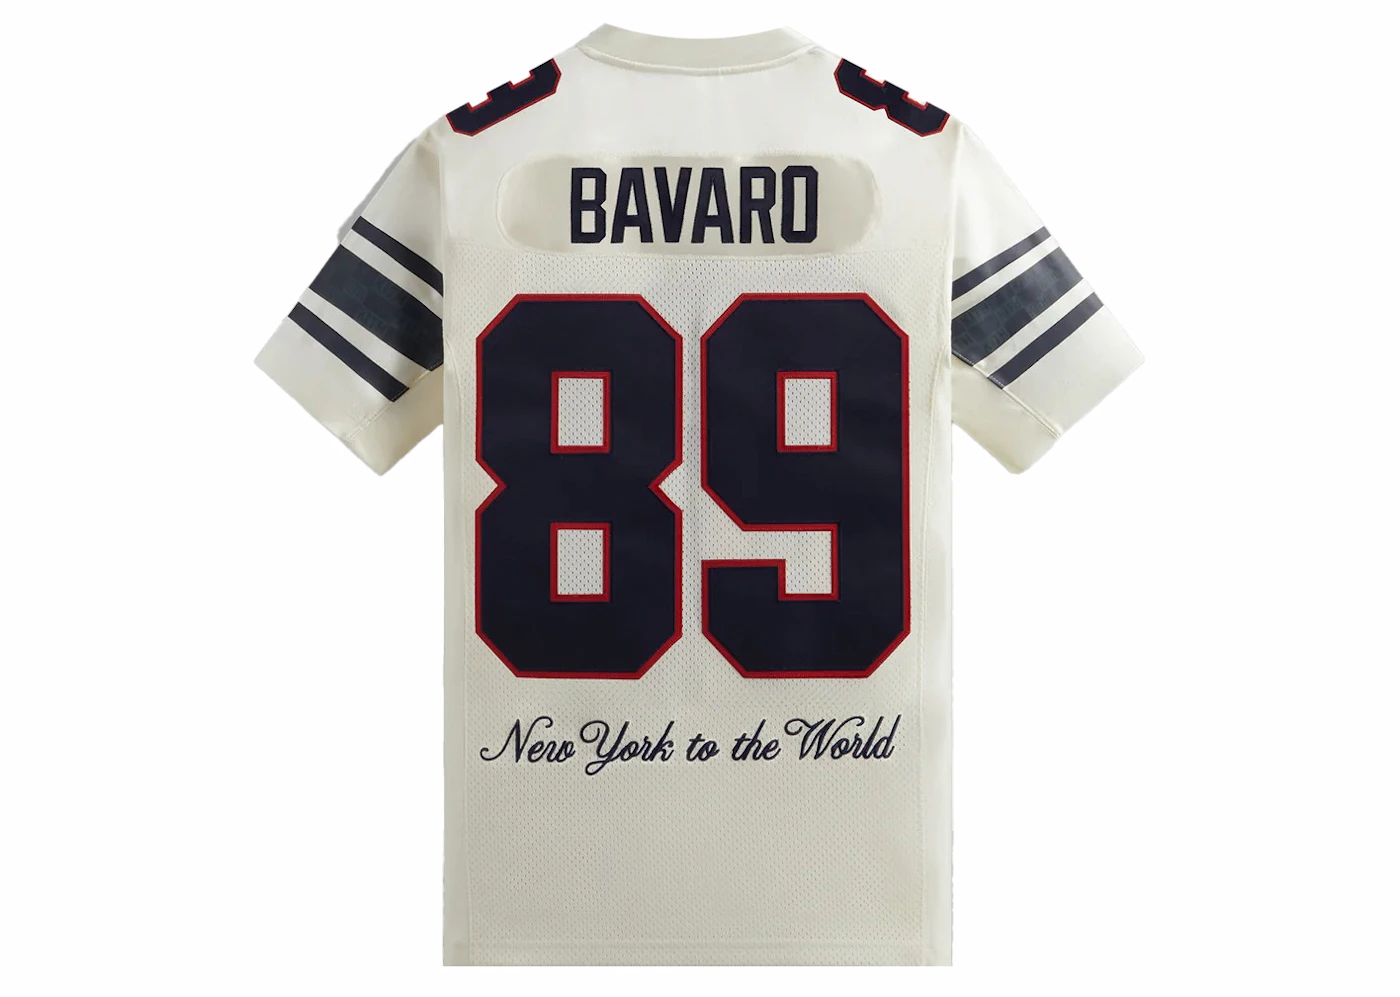 Kith for the NFL: Giants Mitchell & Ness Mark Bavaro Jersey - Sandrift